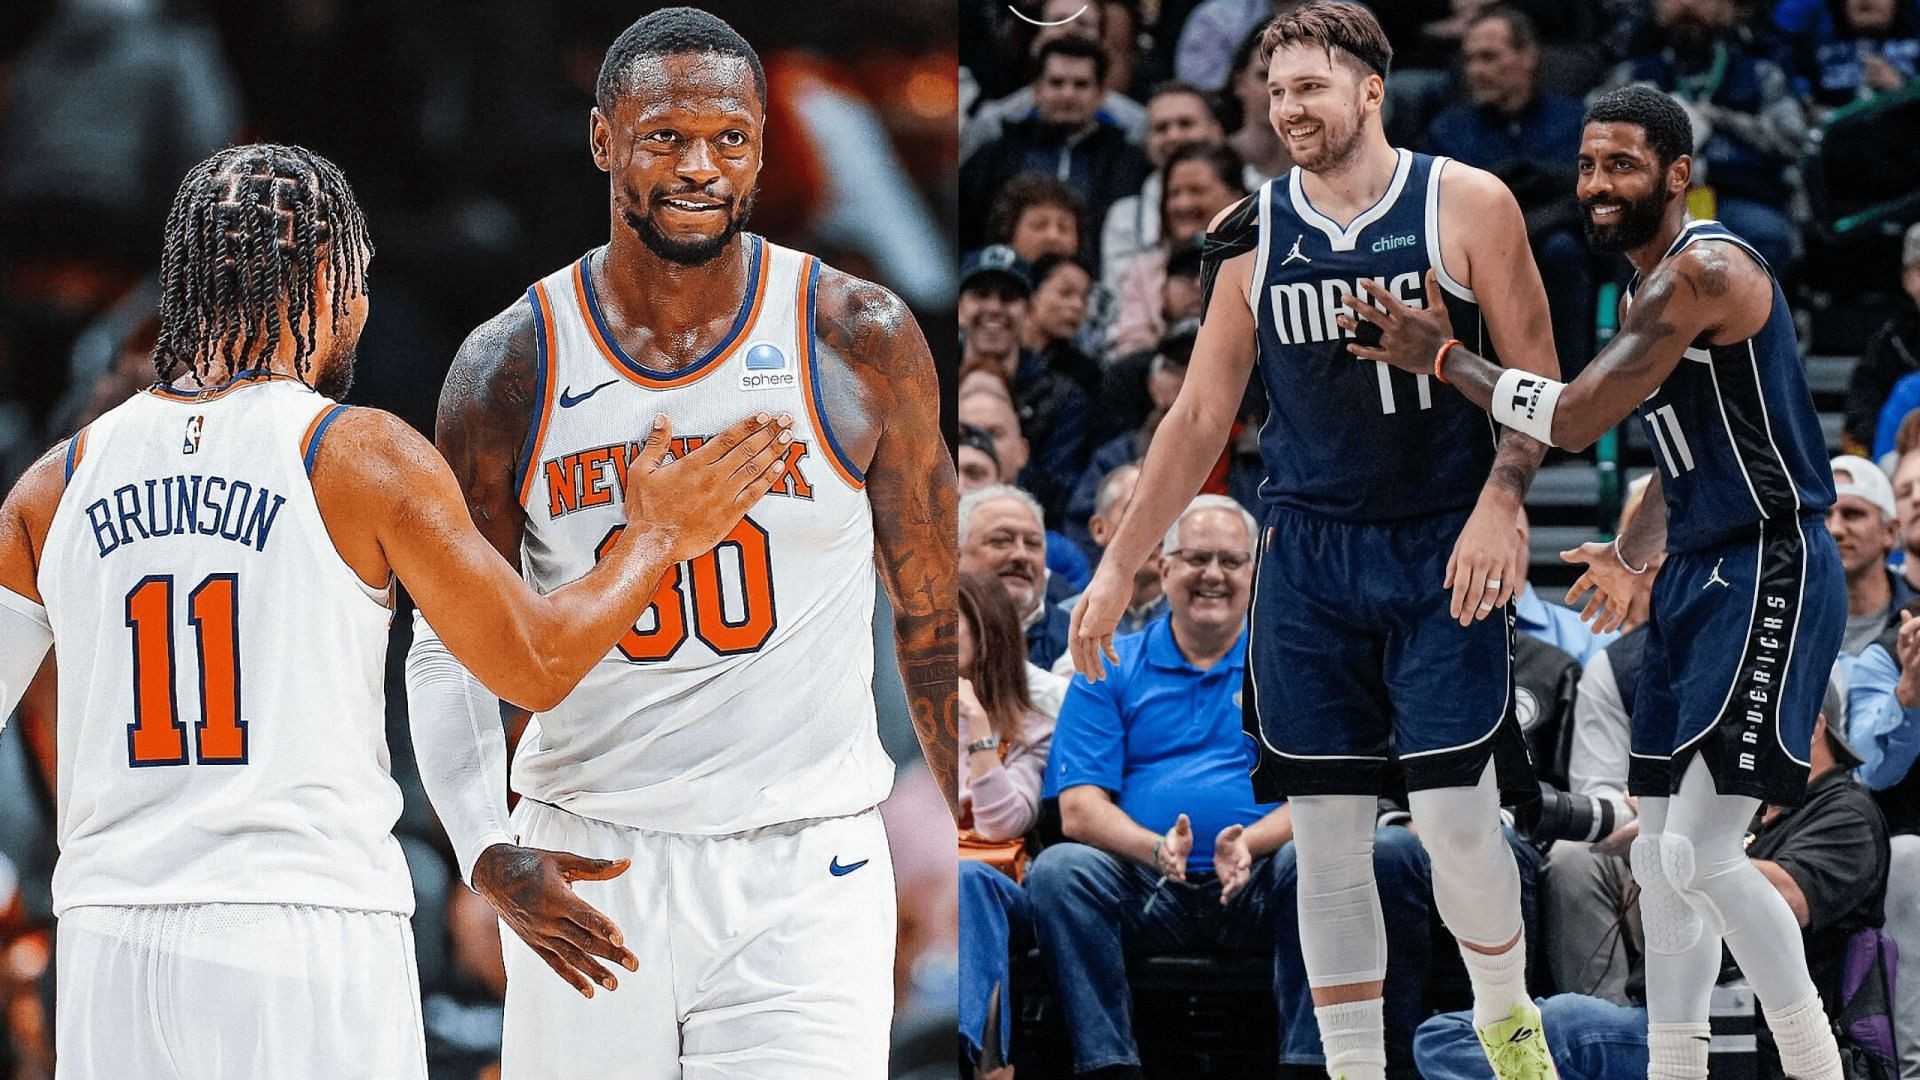 New York Knicks vs Dallas Mavericks starting lineups and depth chart